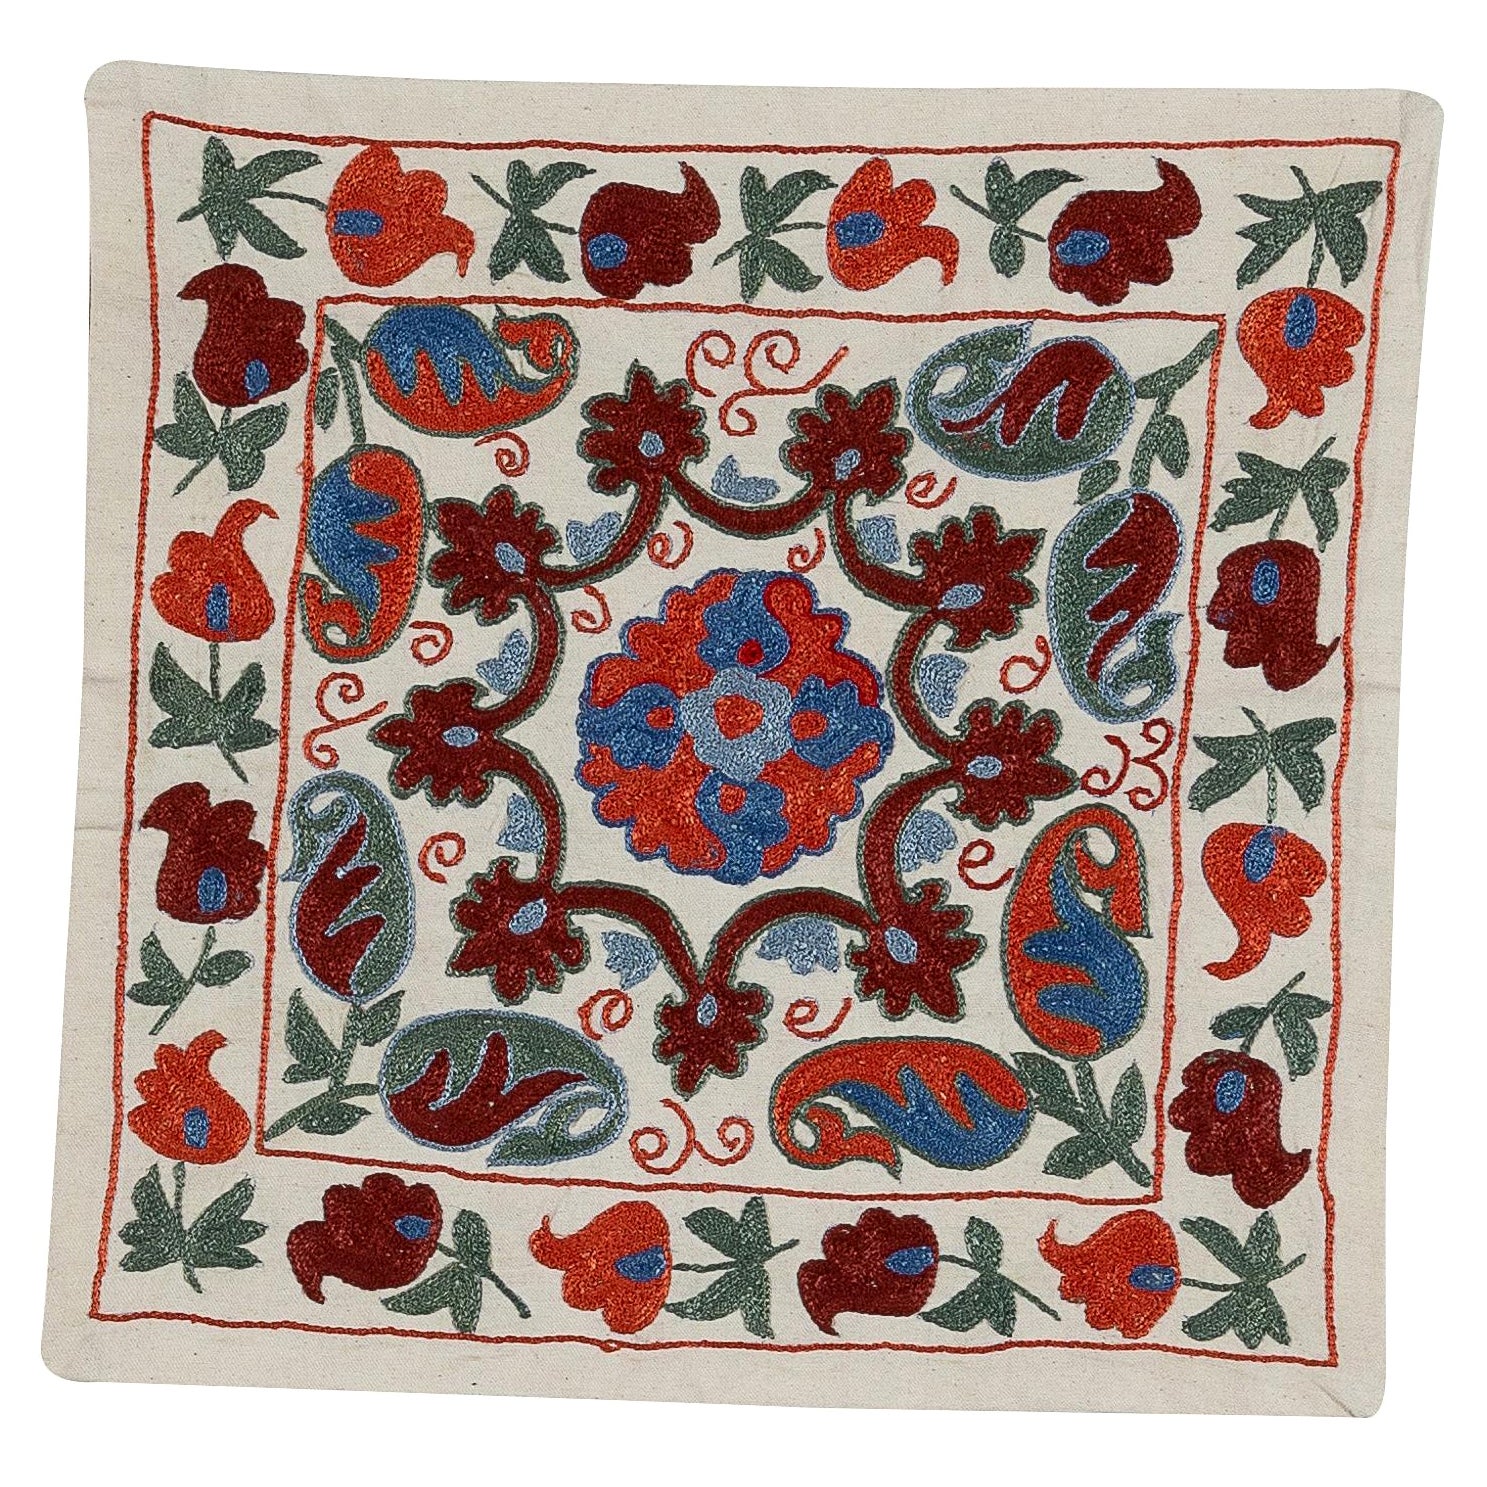 18"x24" Suzani Uzbek Lace Pillow, Embroidered Toss Pillow, Silk Cushion Cover